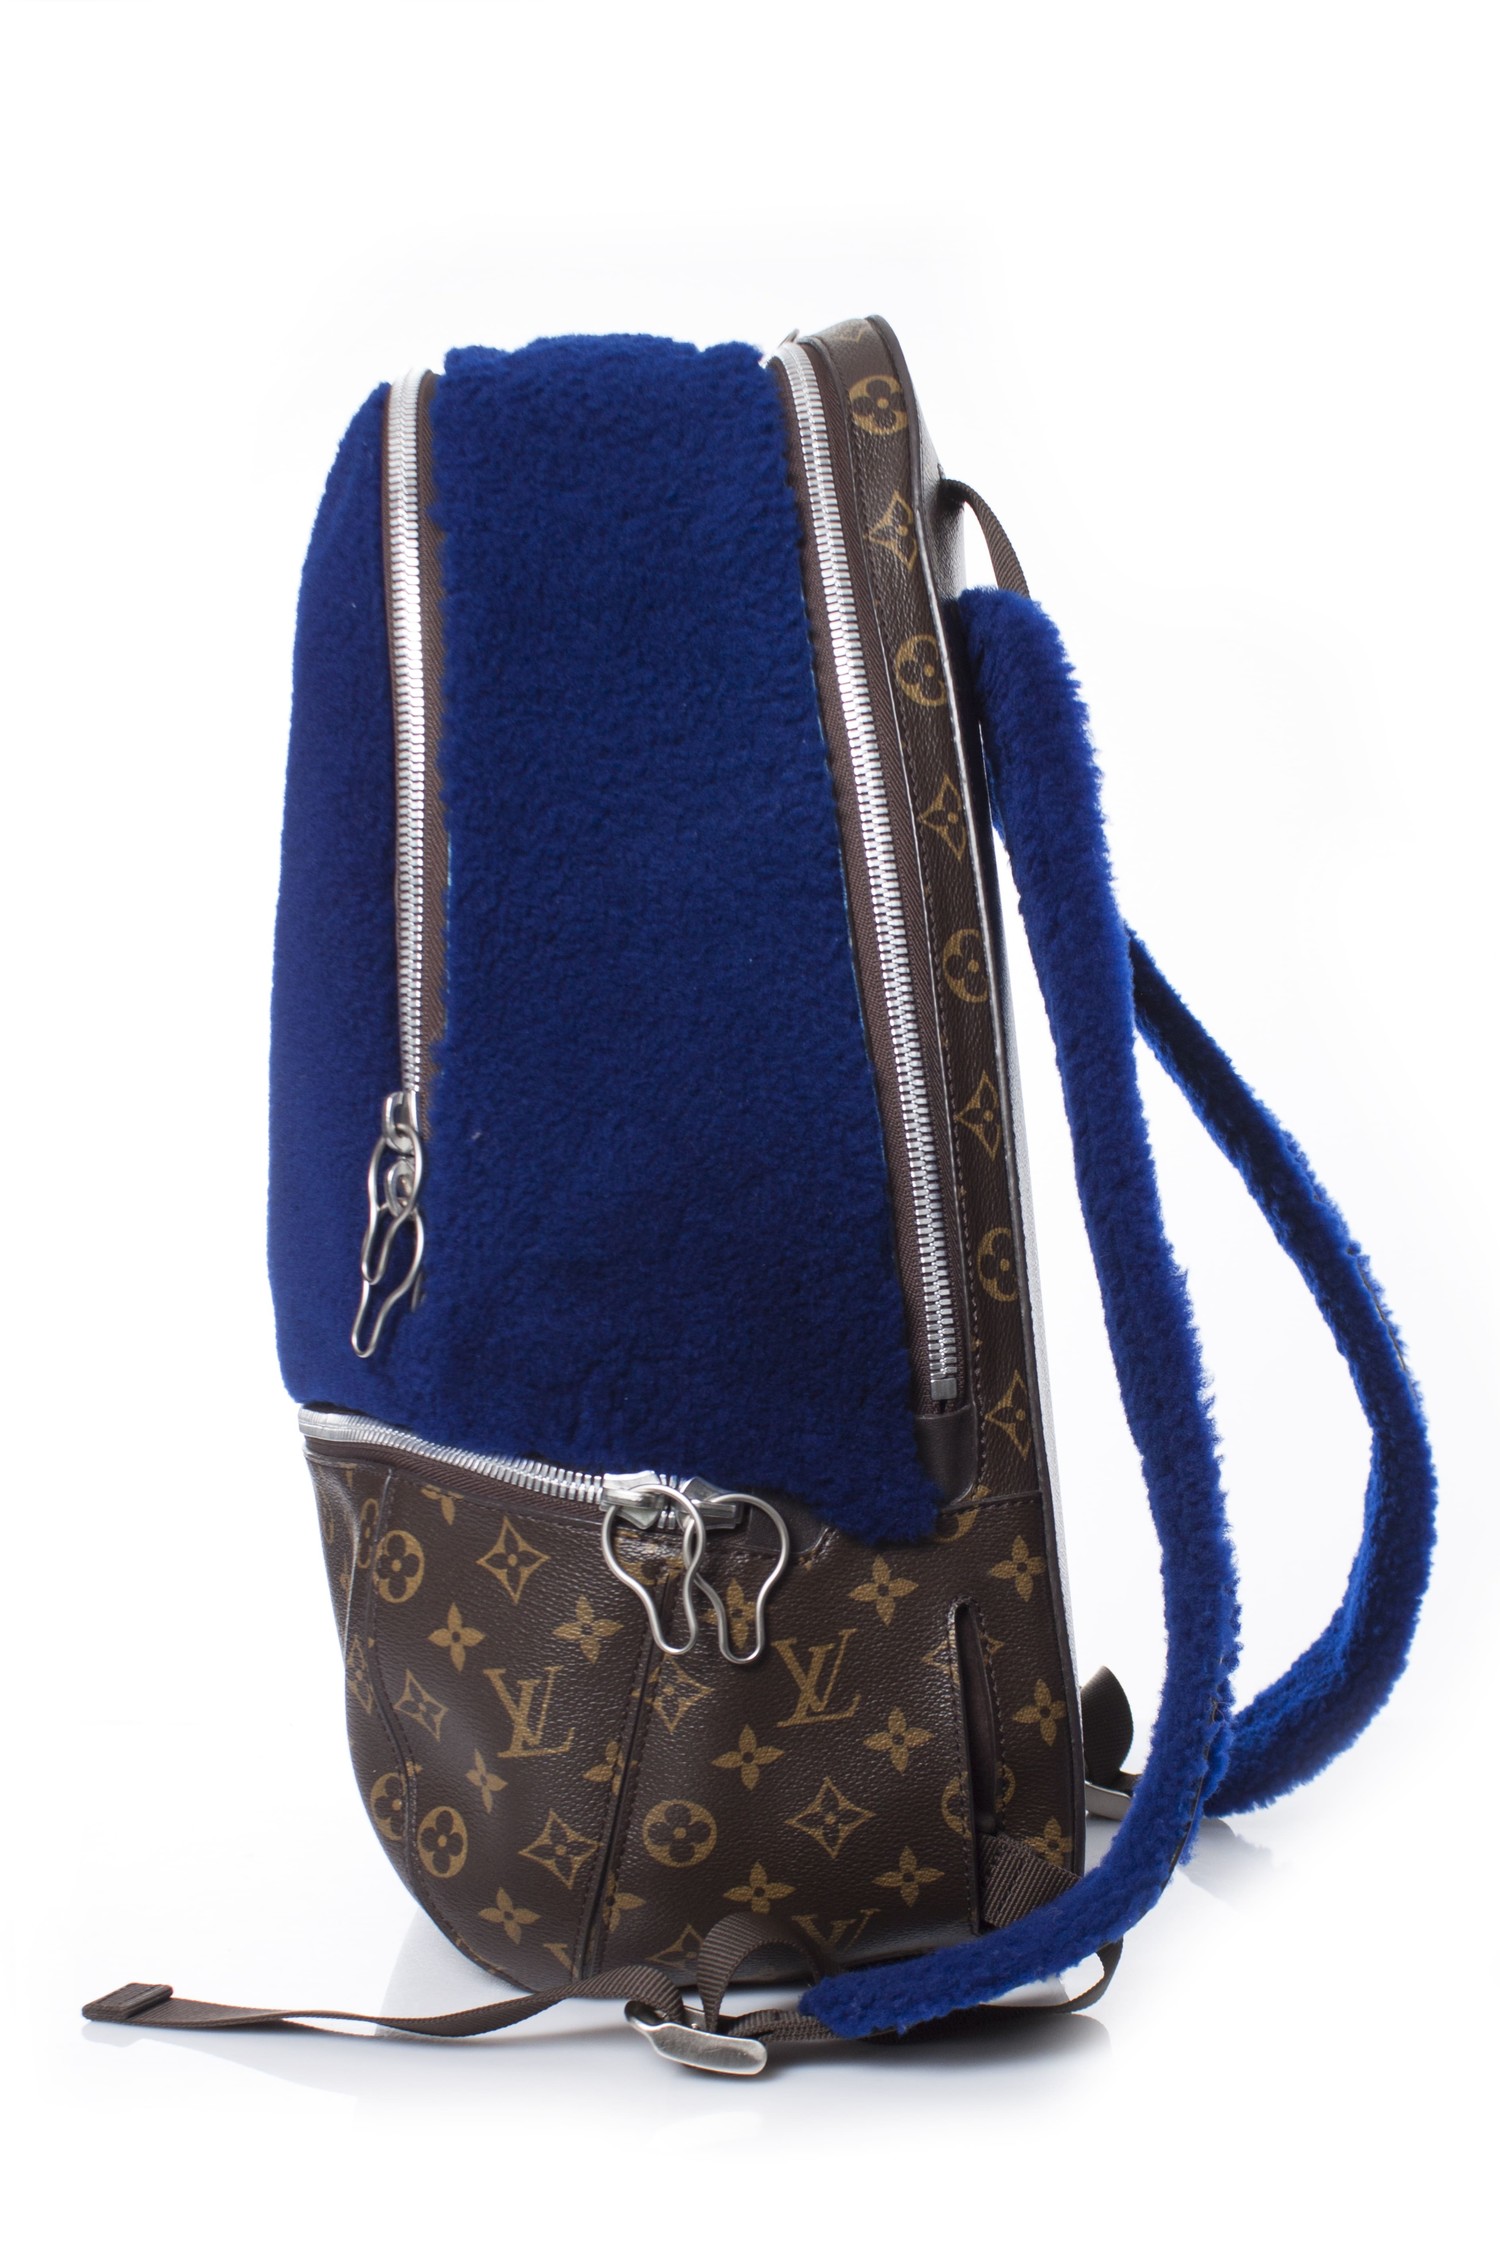 Louis Vuitton, Bags, Authentic Louis Vuitton Marc Newson Backpack